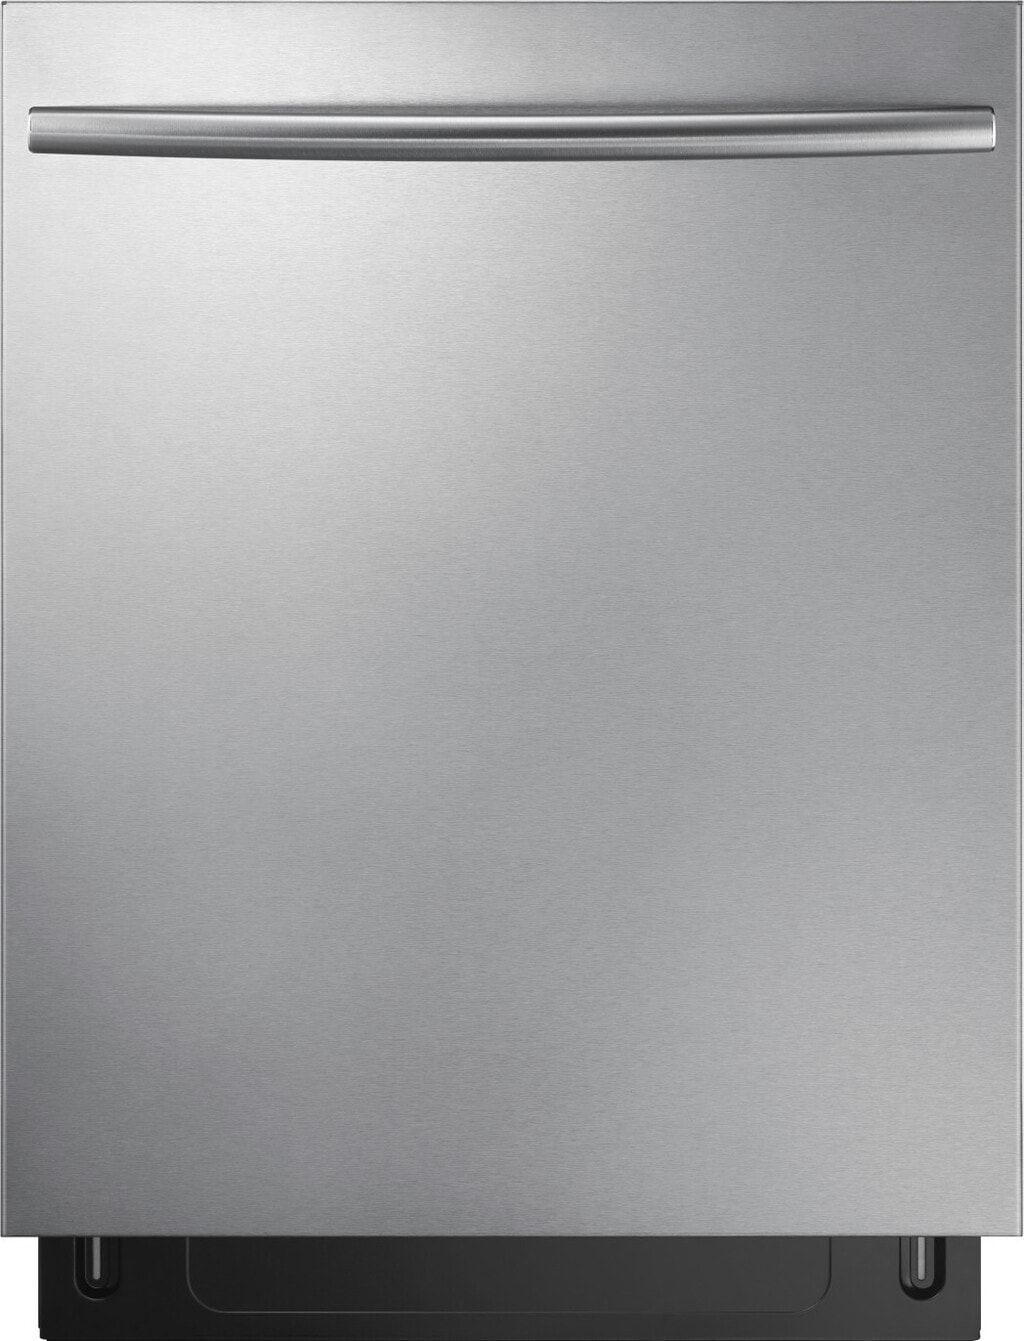 Stainless Steel Samsung StormWash 7050 Dishwasher at Best Buy